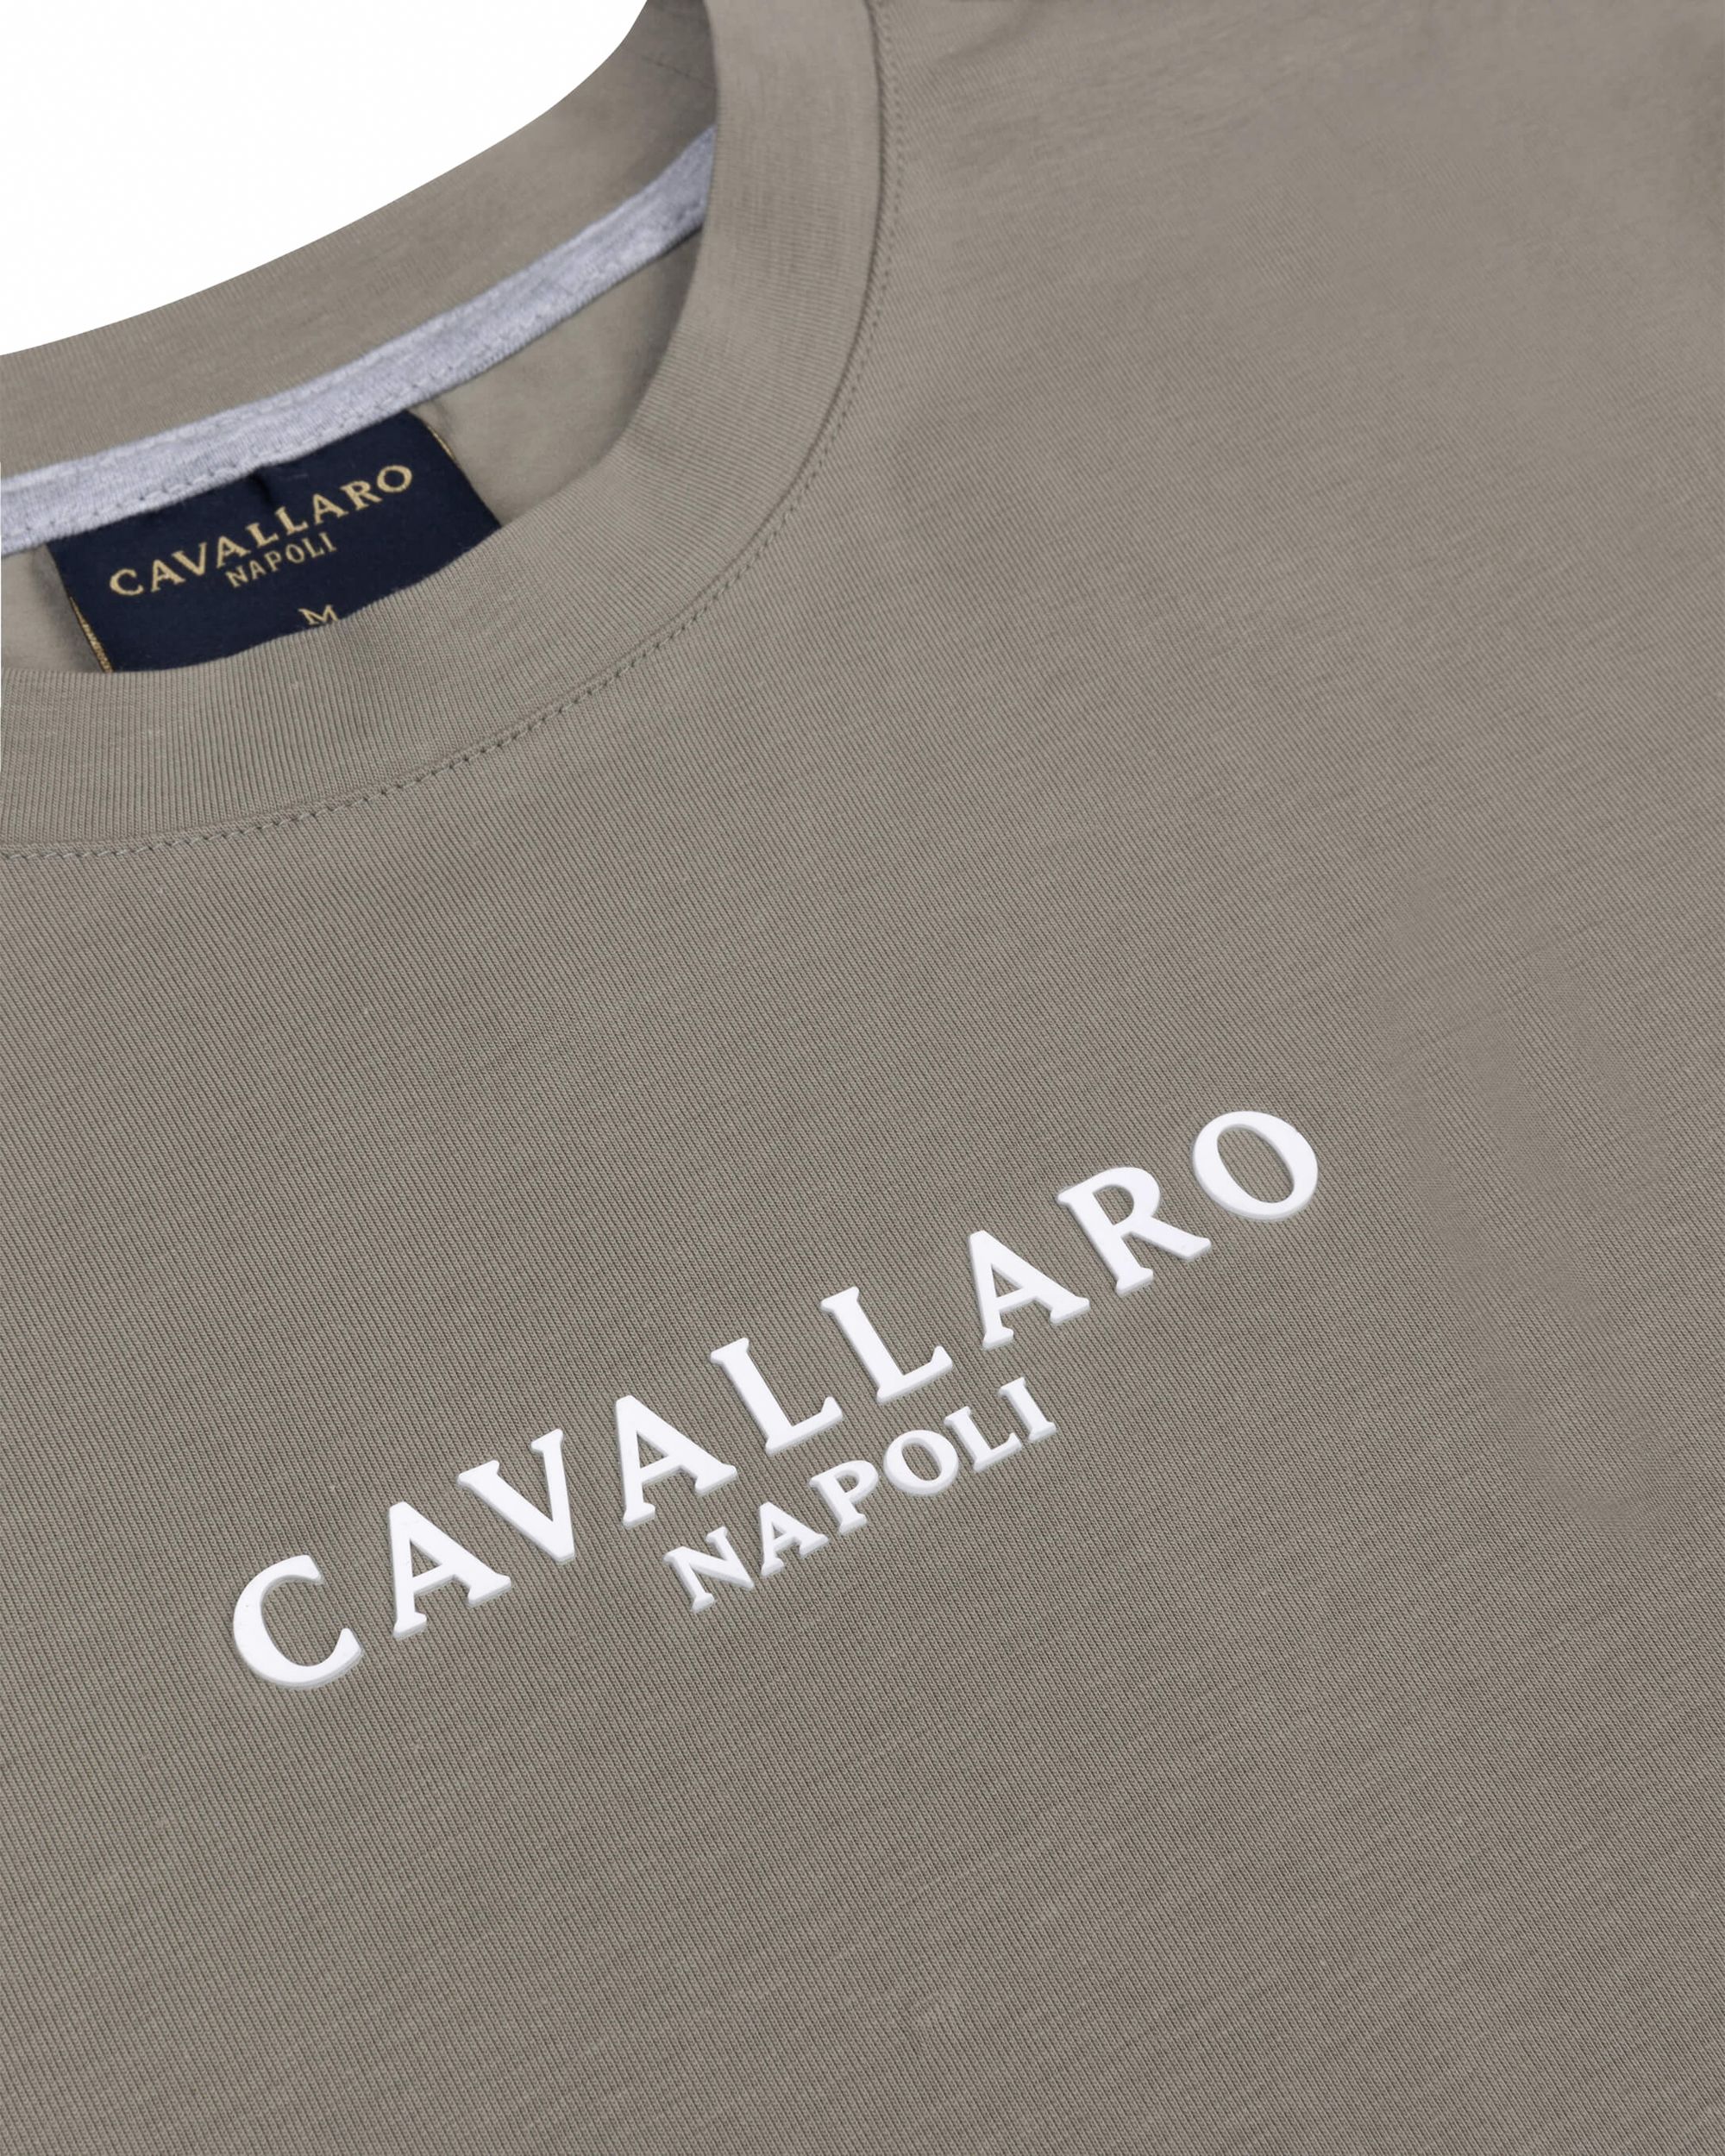 Cavallaro Bari T-shirt KM Groen 094412-001-L